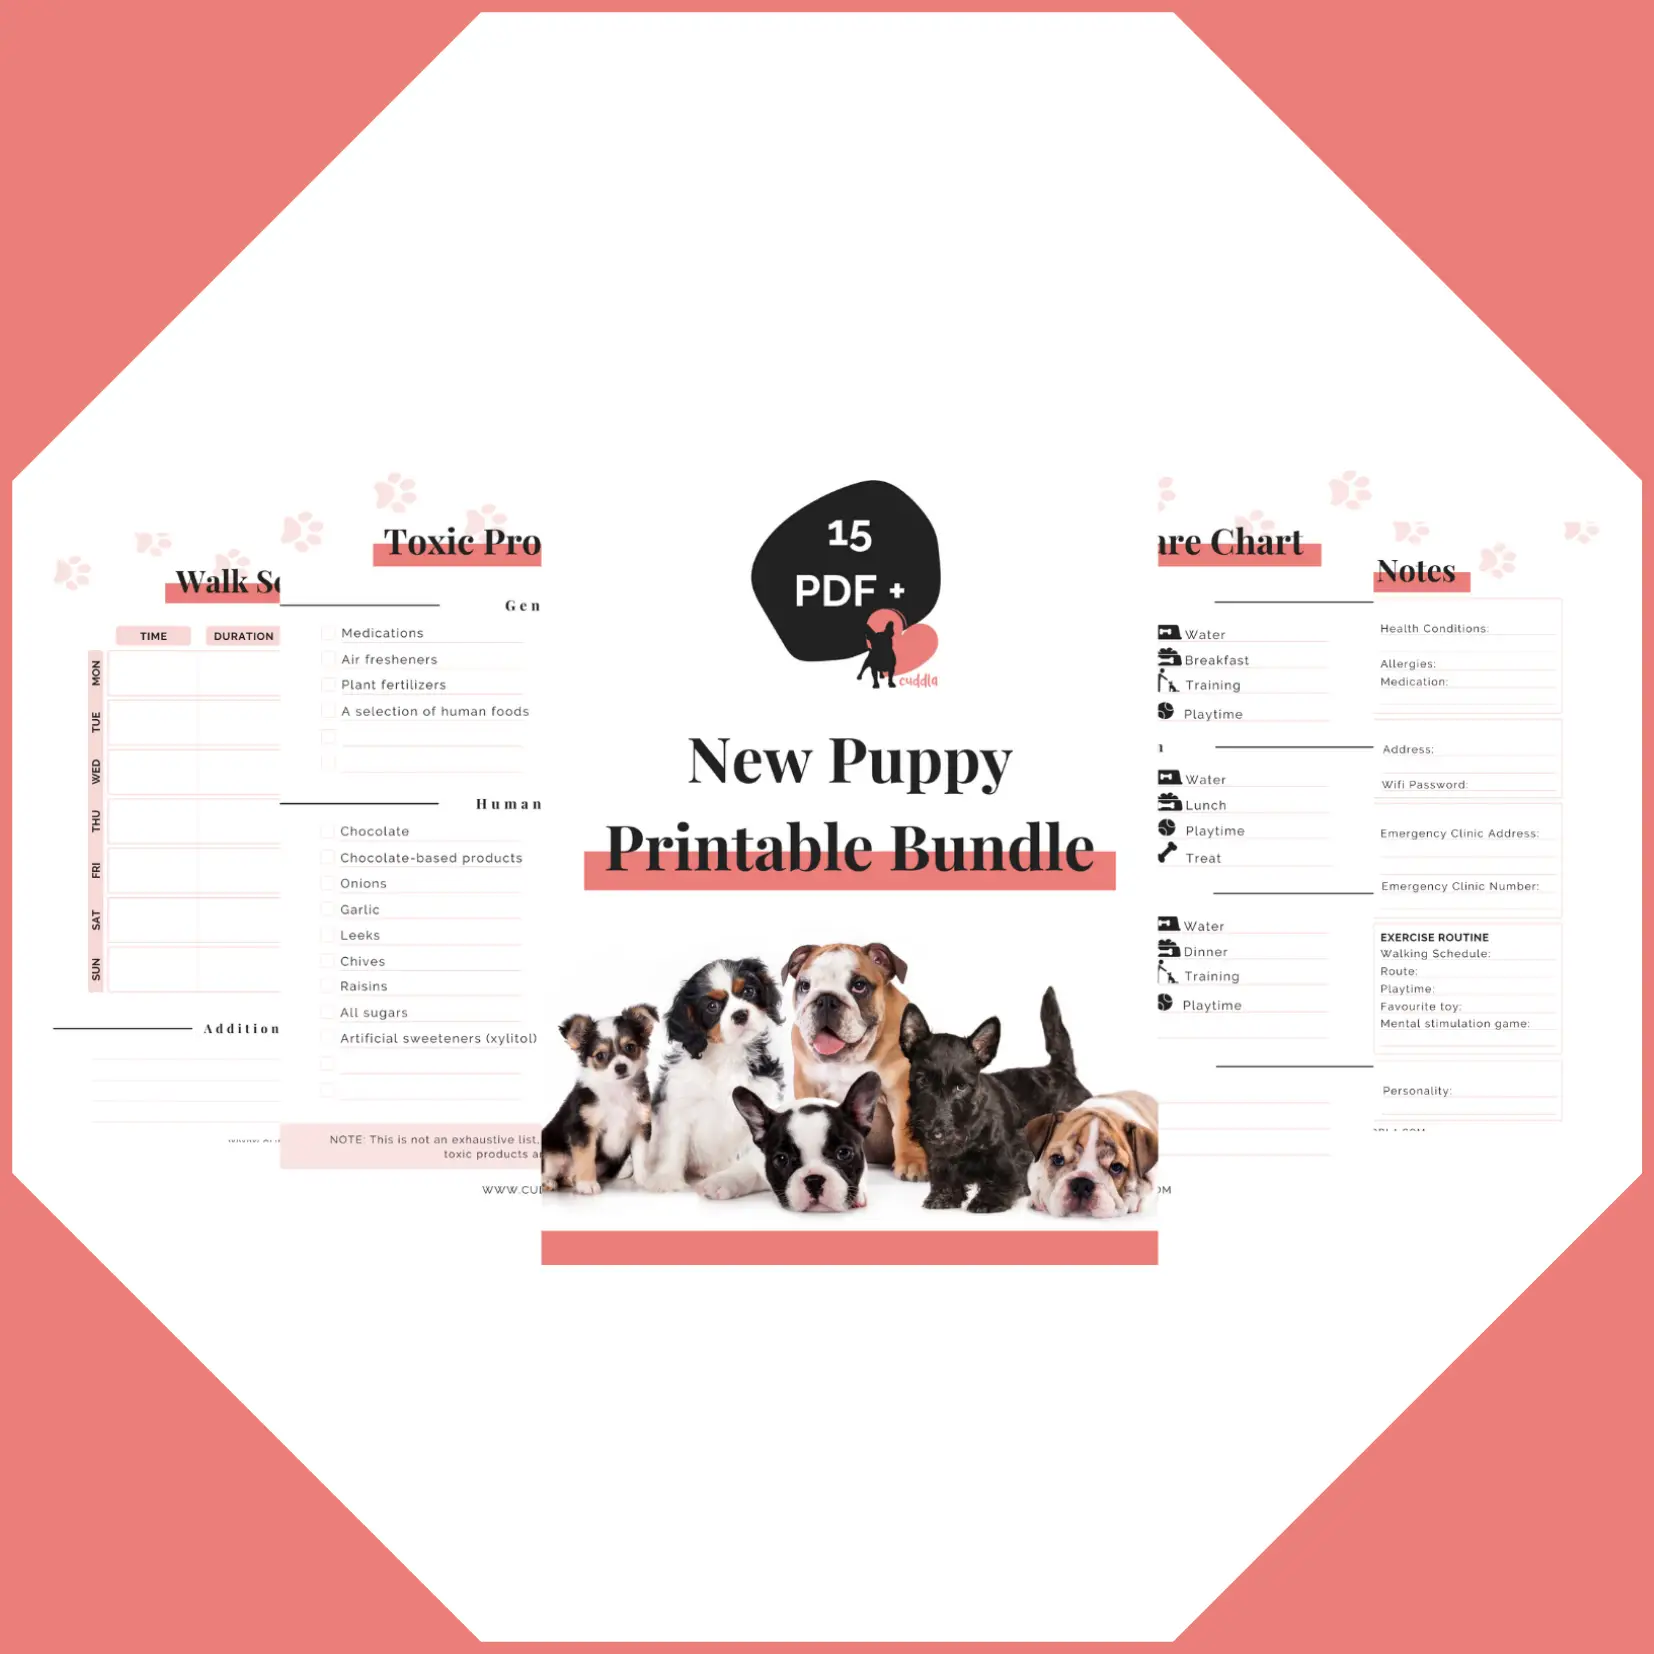 cuddla-resources-new-puppy-printable-bundle-pink